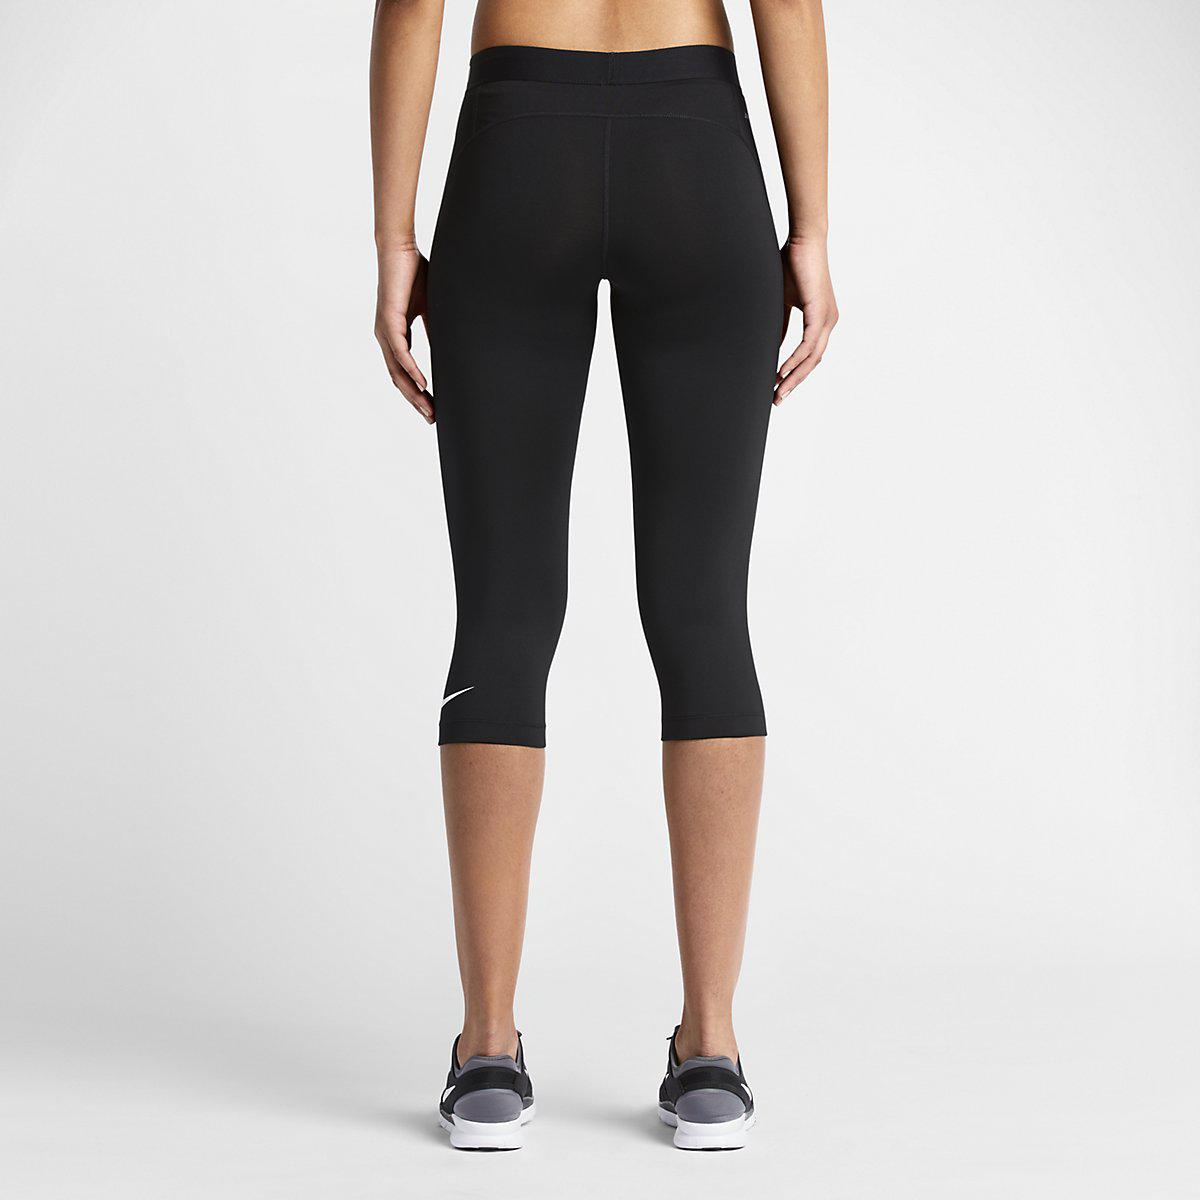 Nike Womens Pro Training Capris - Black - Tennisnuts.com